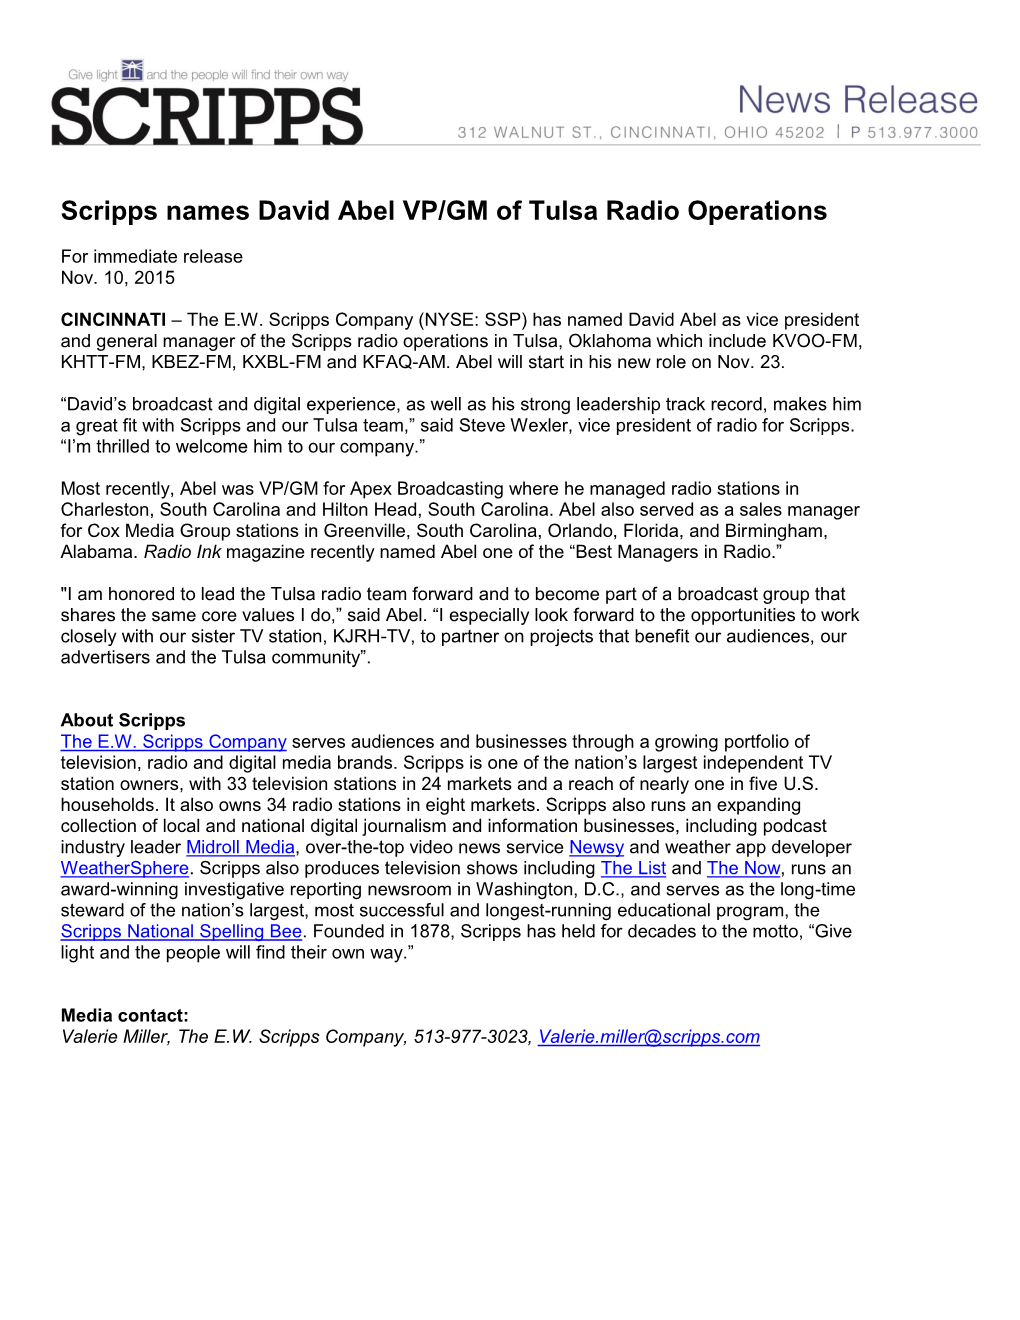 Scripps Names David Abel VP/GM of Tulsa Radio Operations